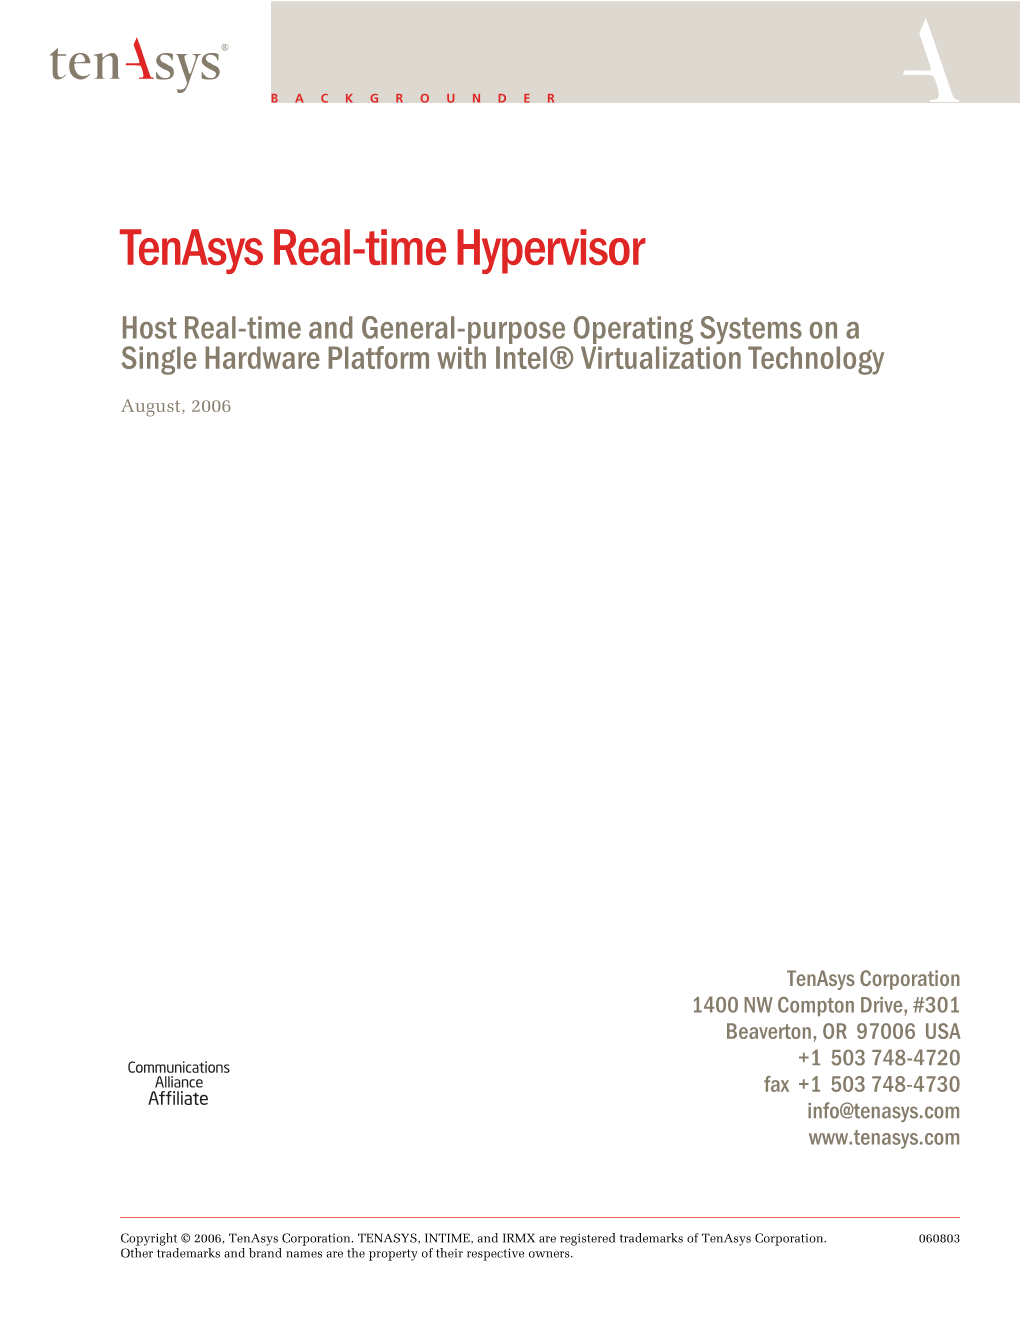 Tenasys Real-Time Hypervisor